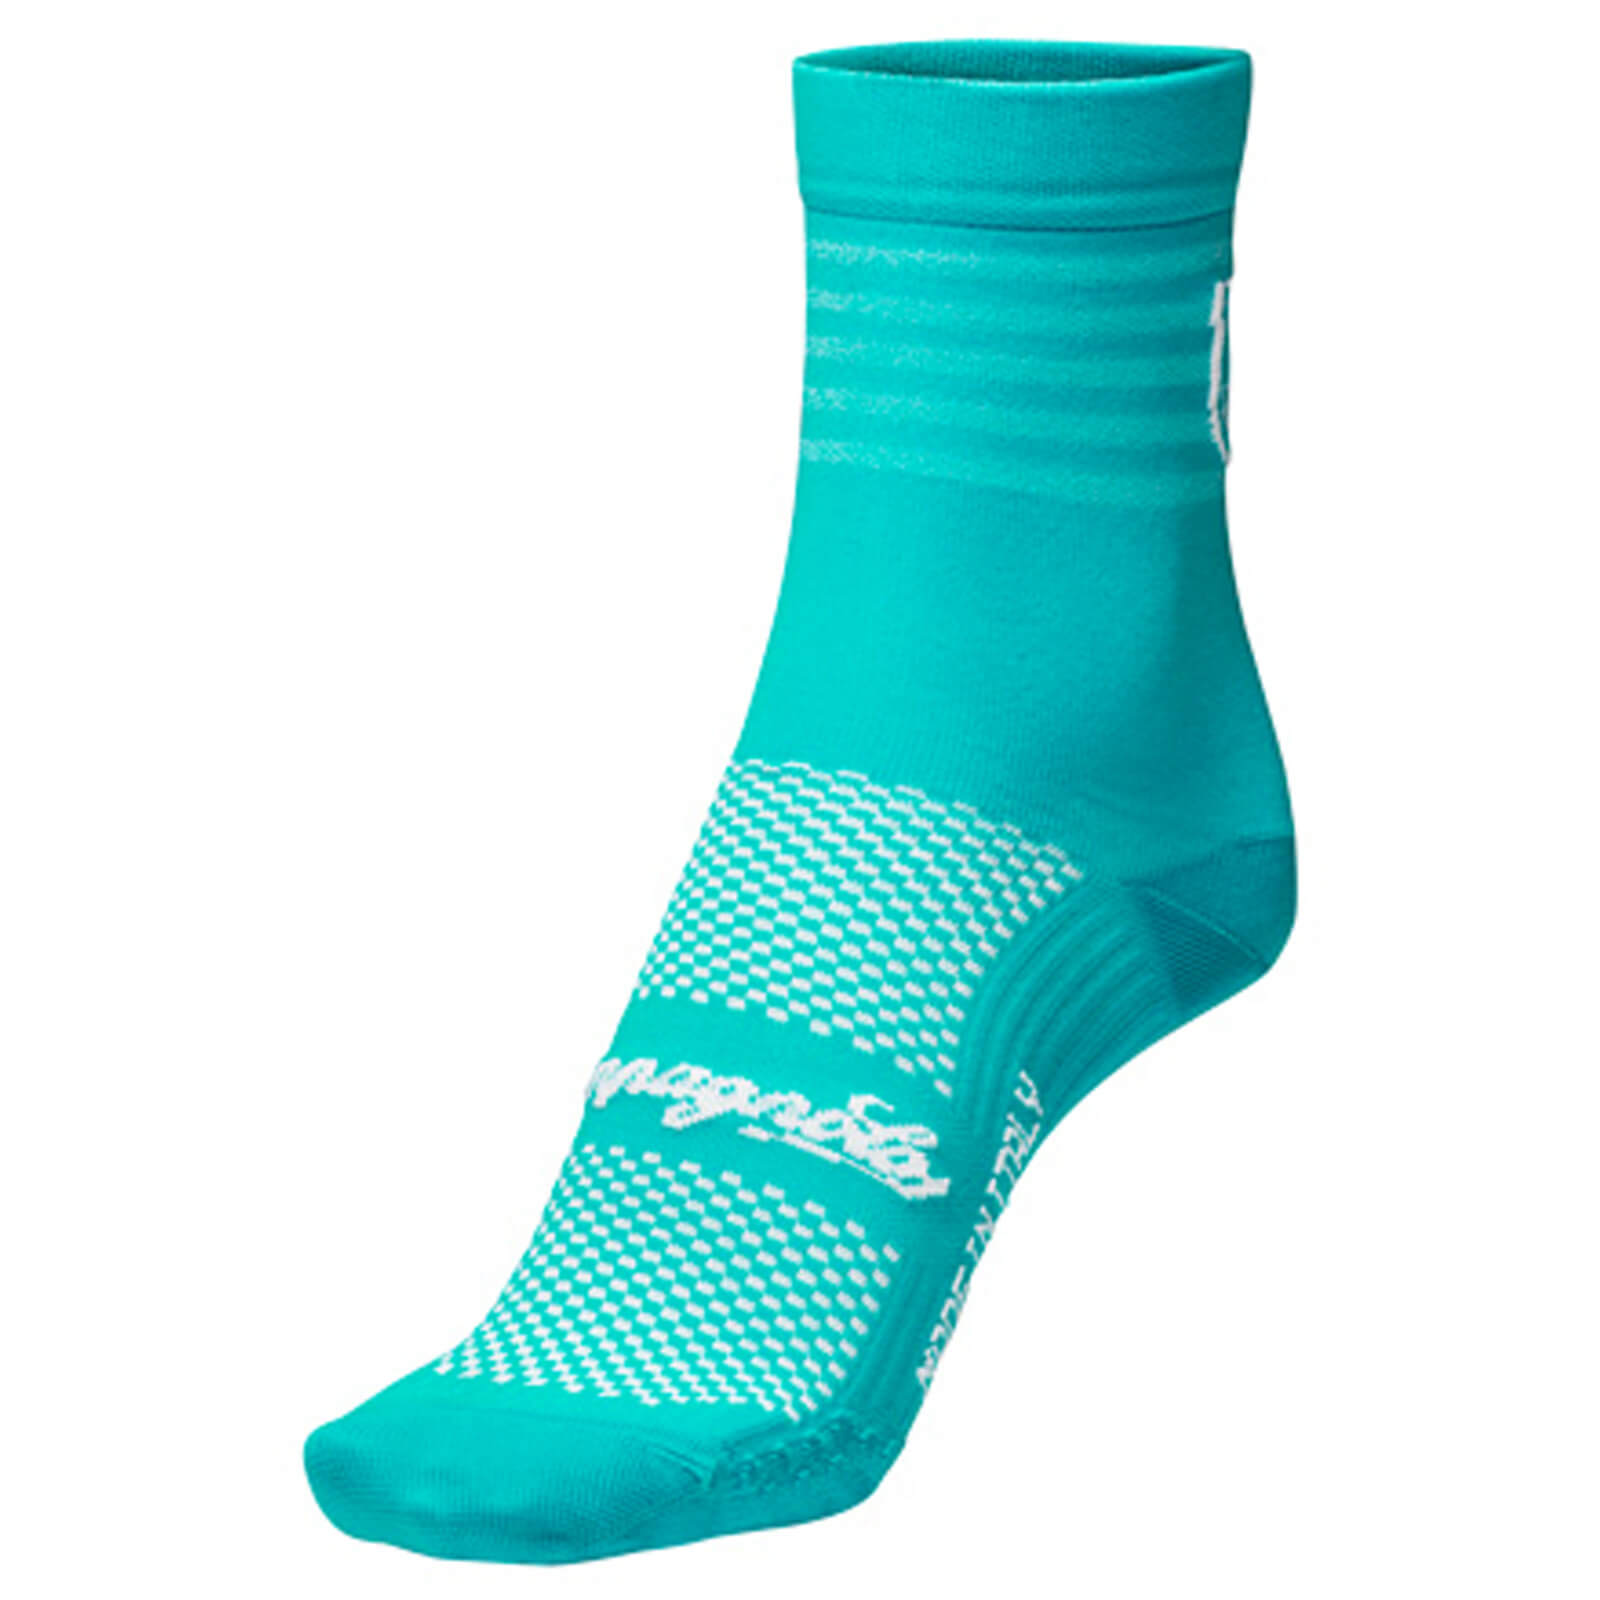 Nalini Campagnolo Litech Socks - L/XL - Aqua Green